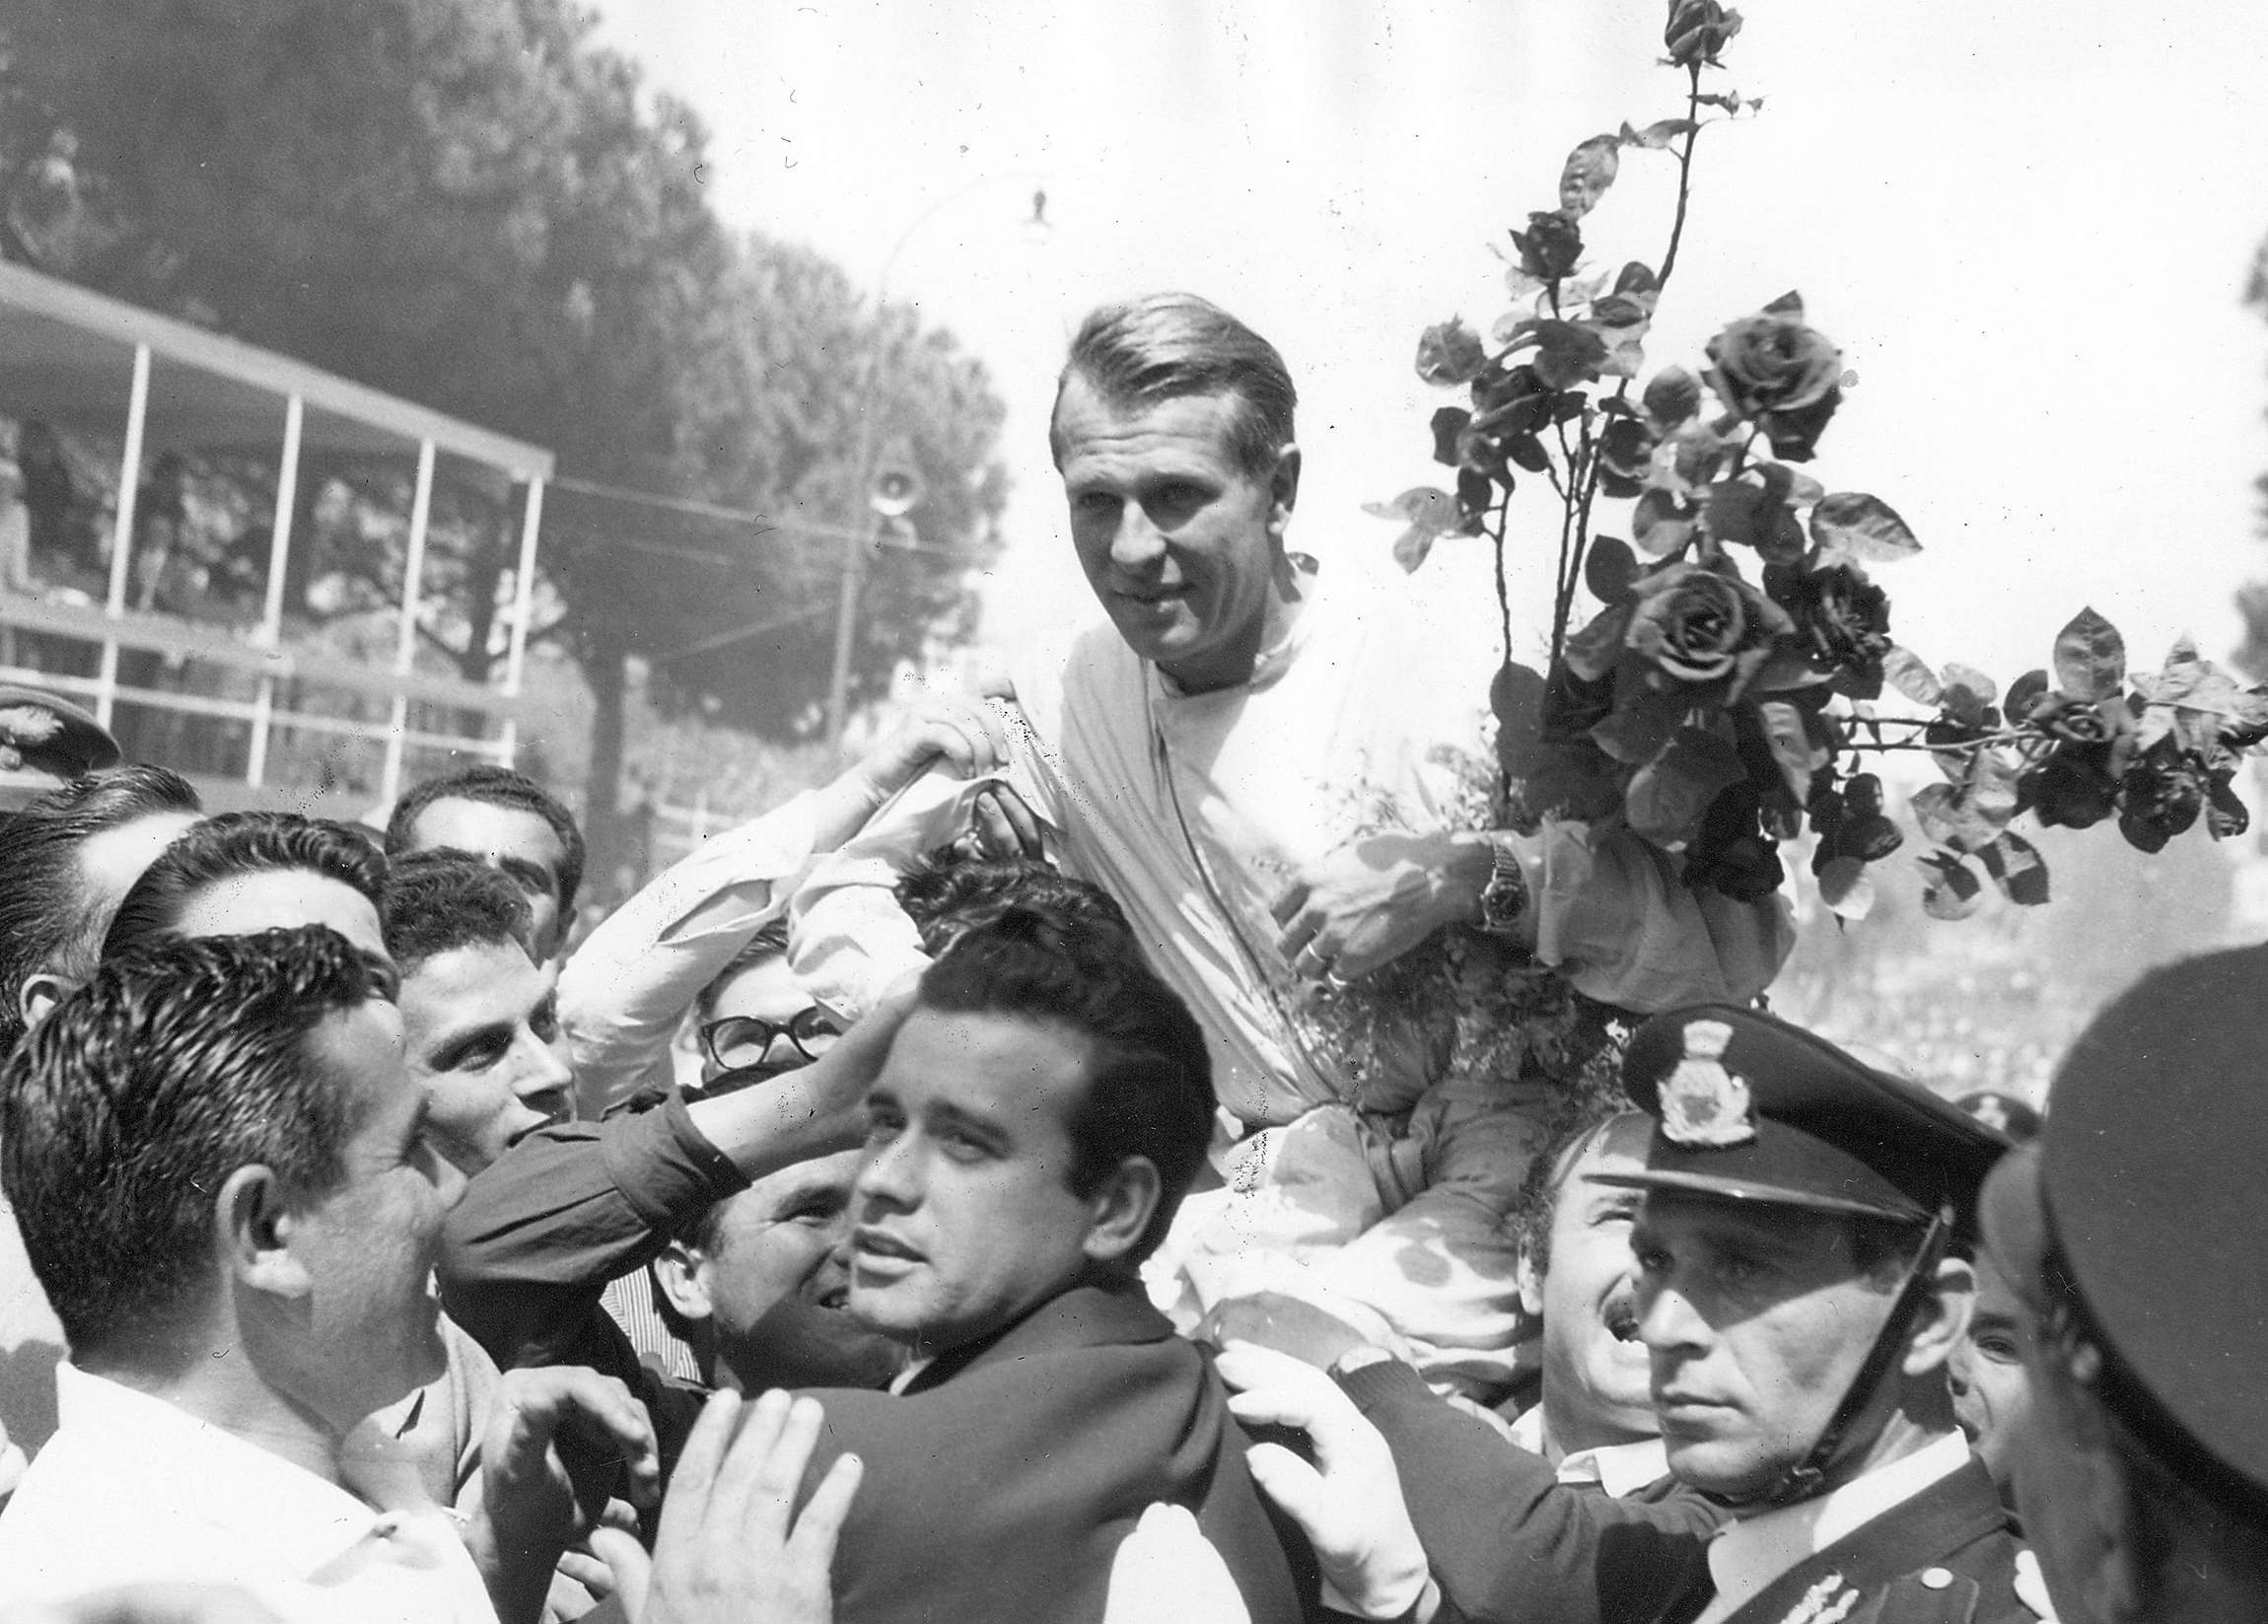  Peter Collins - winner of the 1957 Naples Grand Prix - for Ferrari